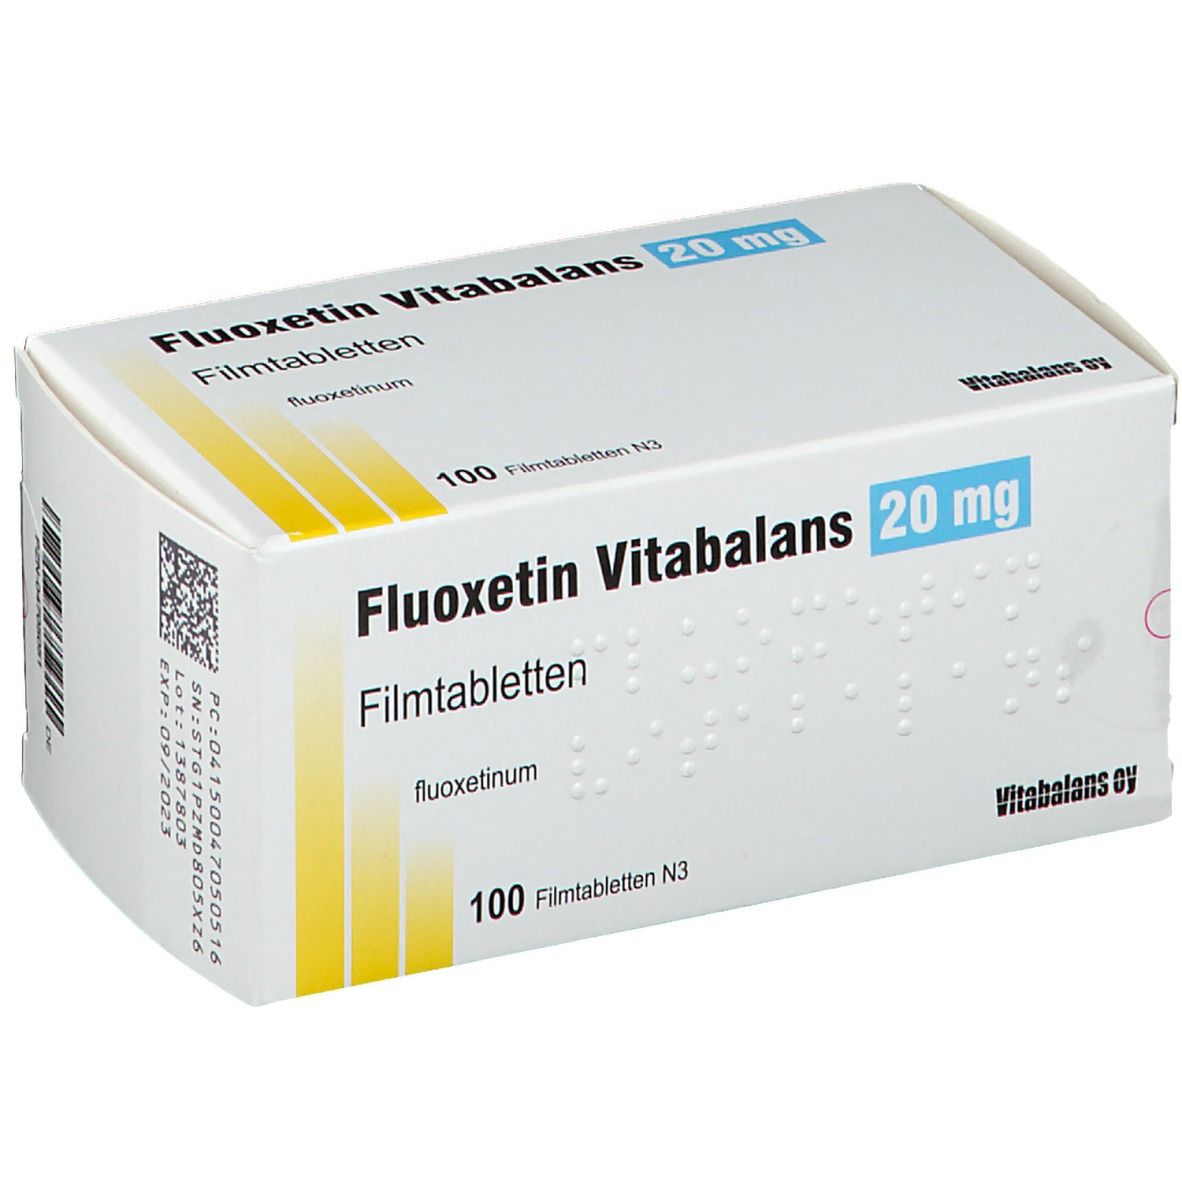 Fluoxetin Vitabalans 20 mg